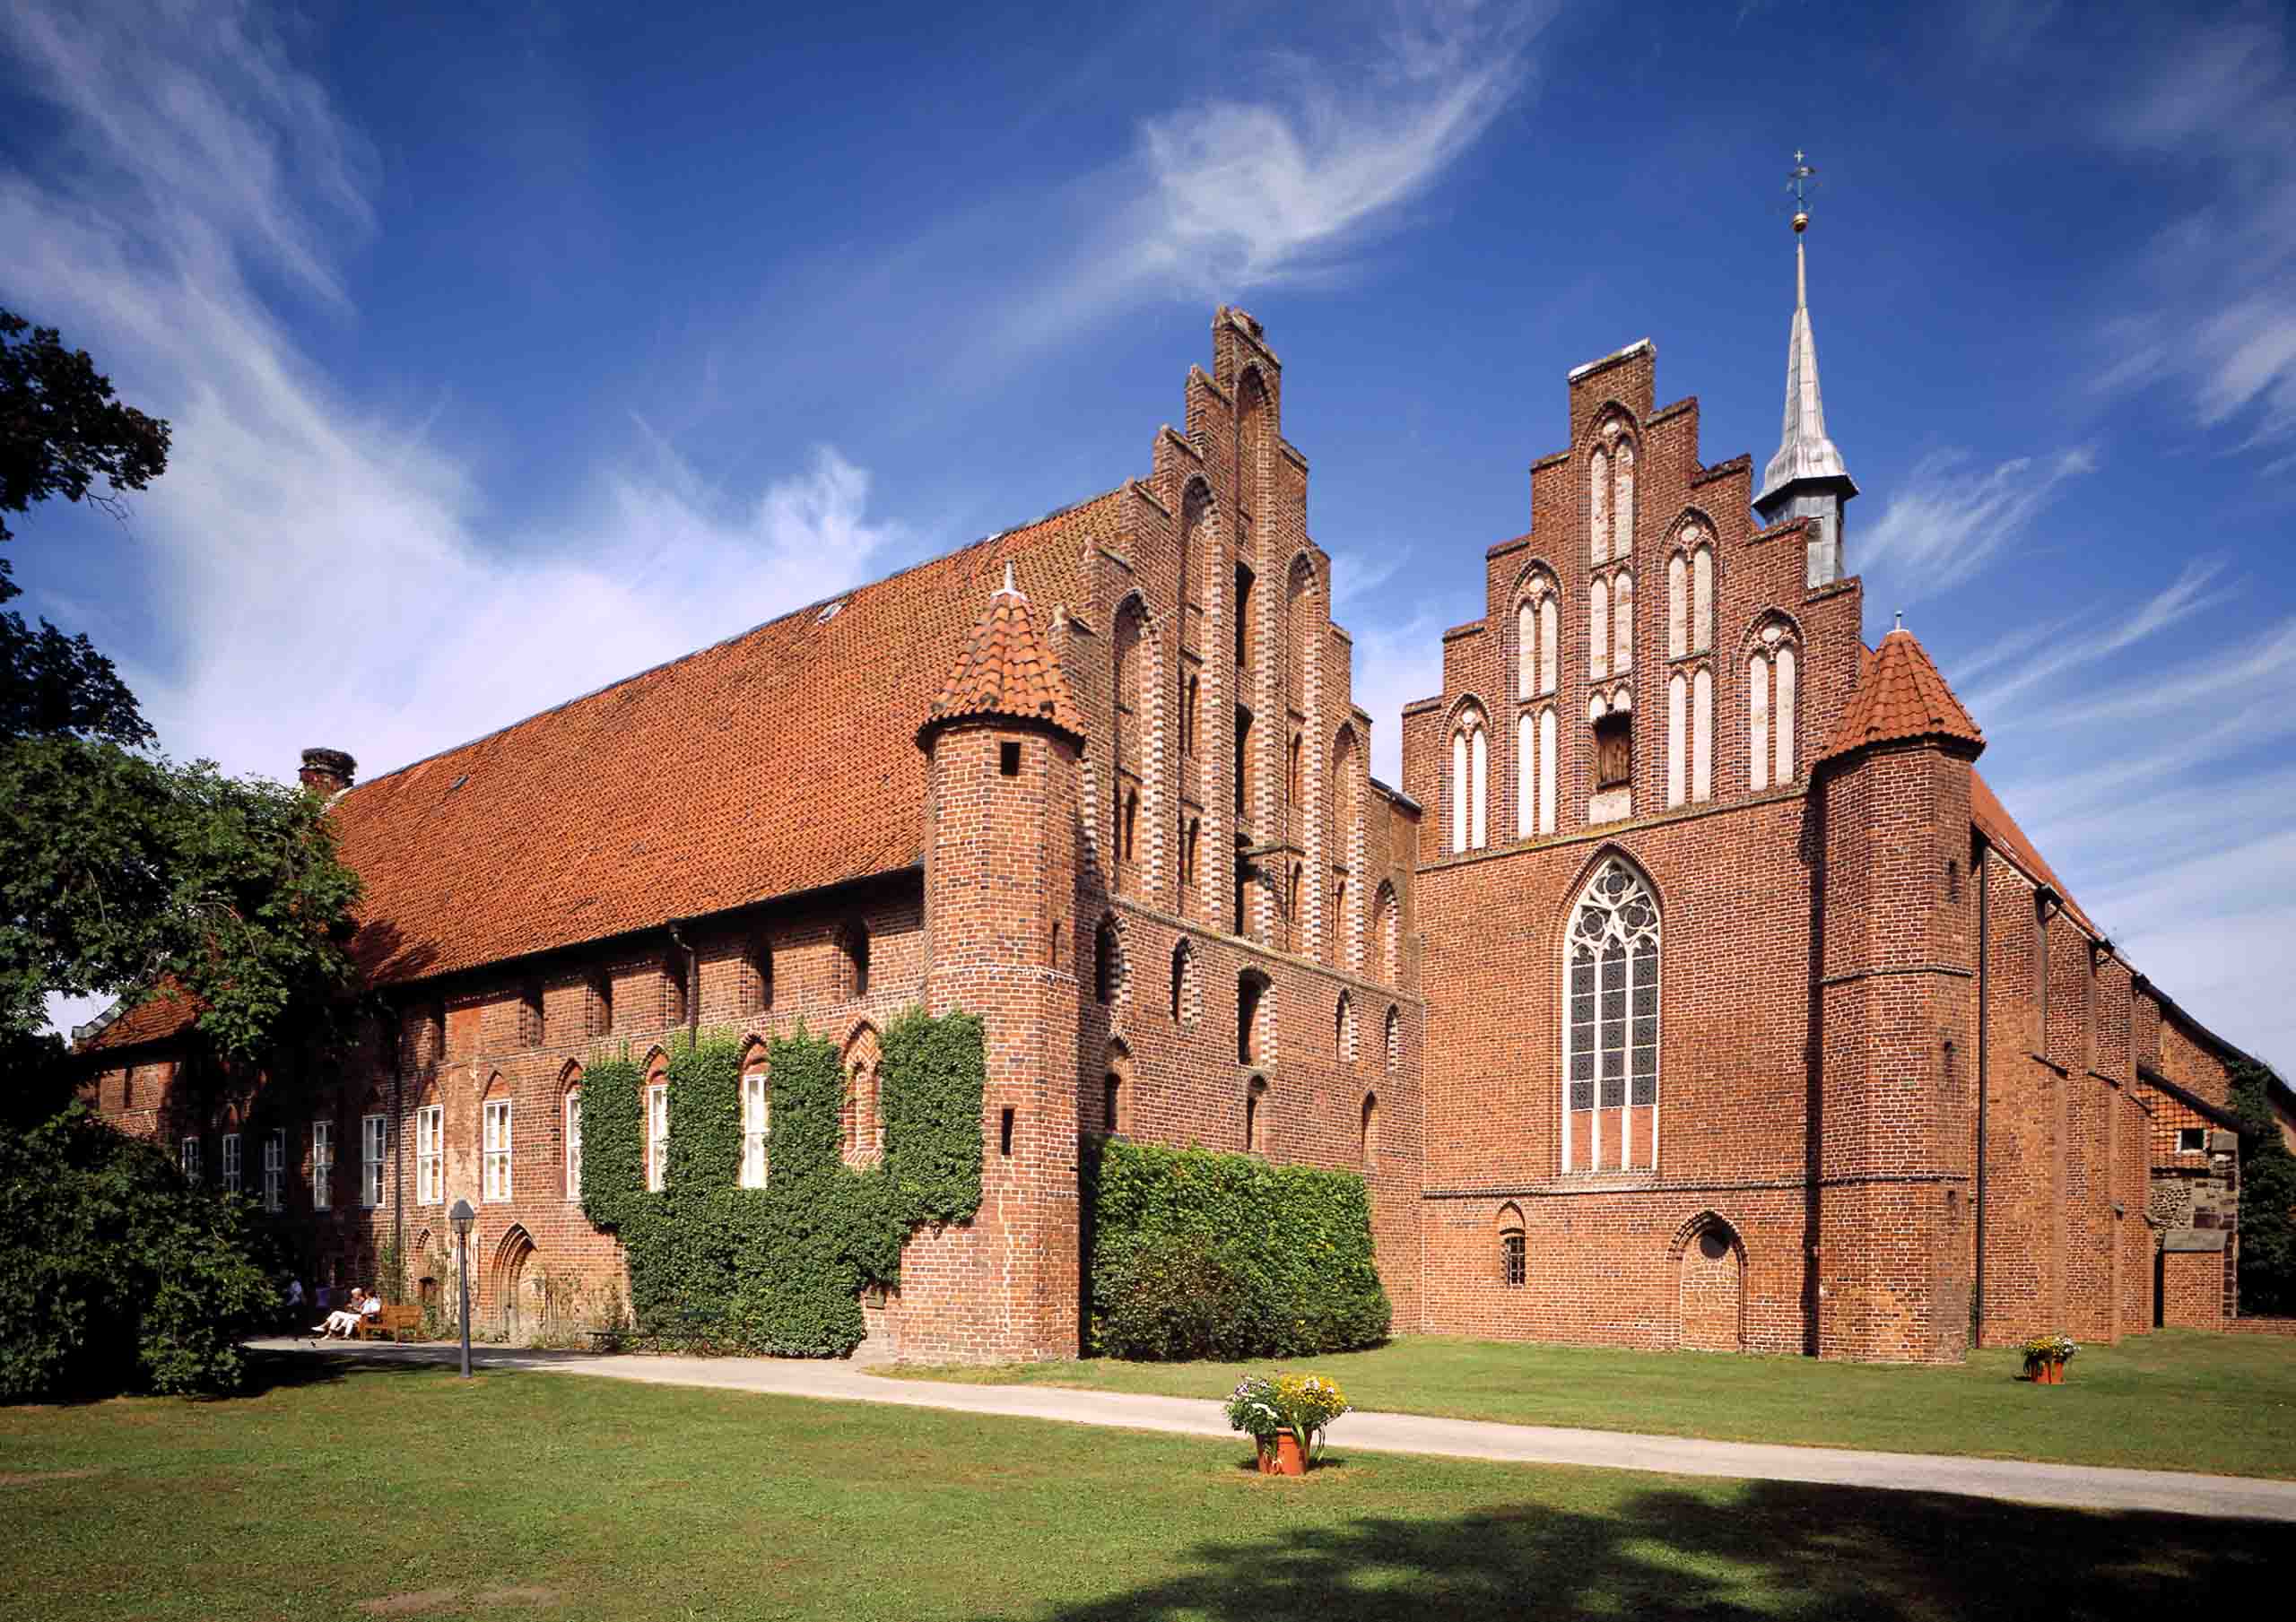 The monastery in Wienhausen